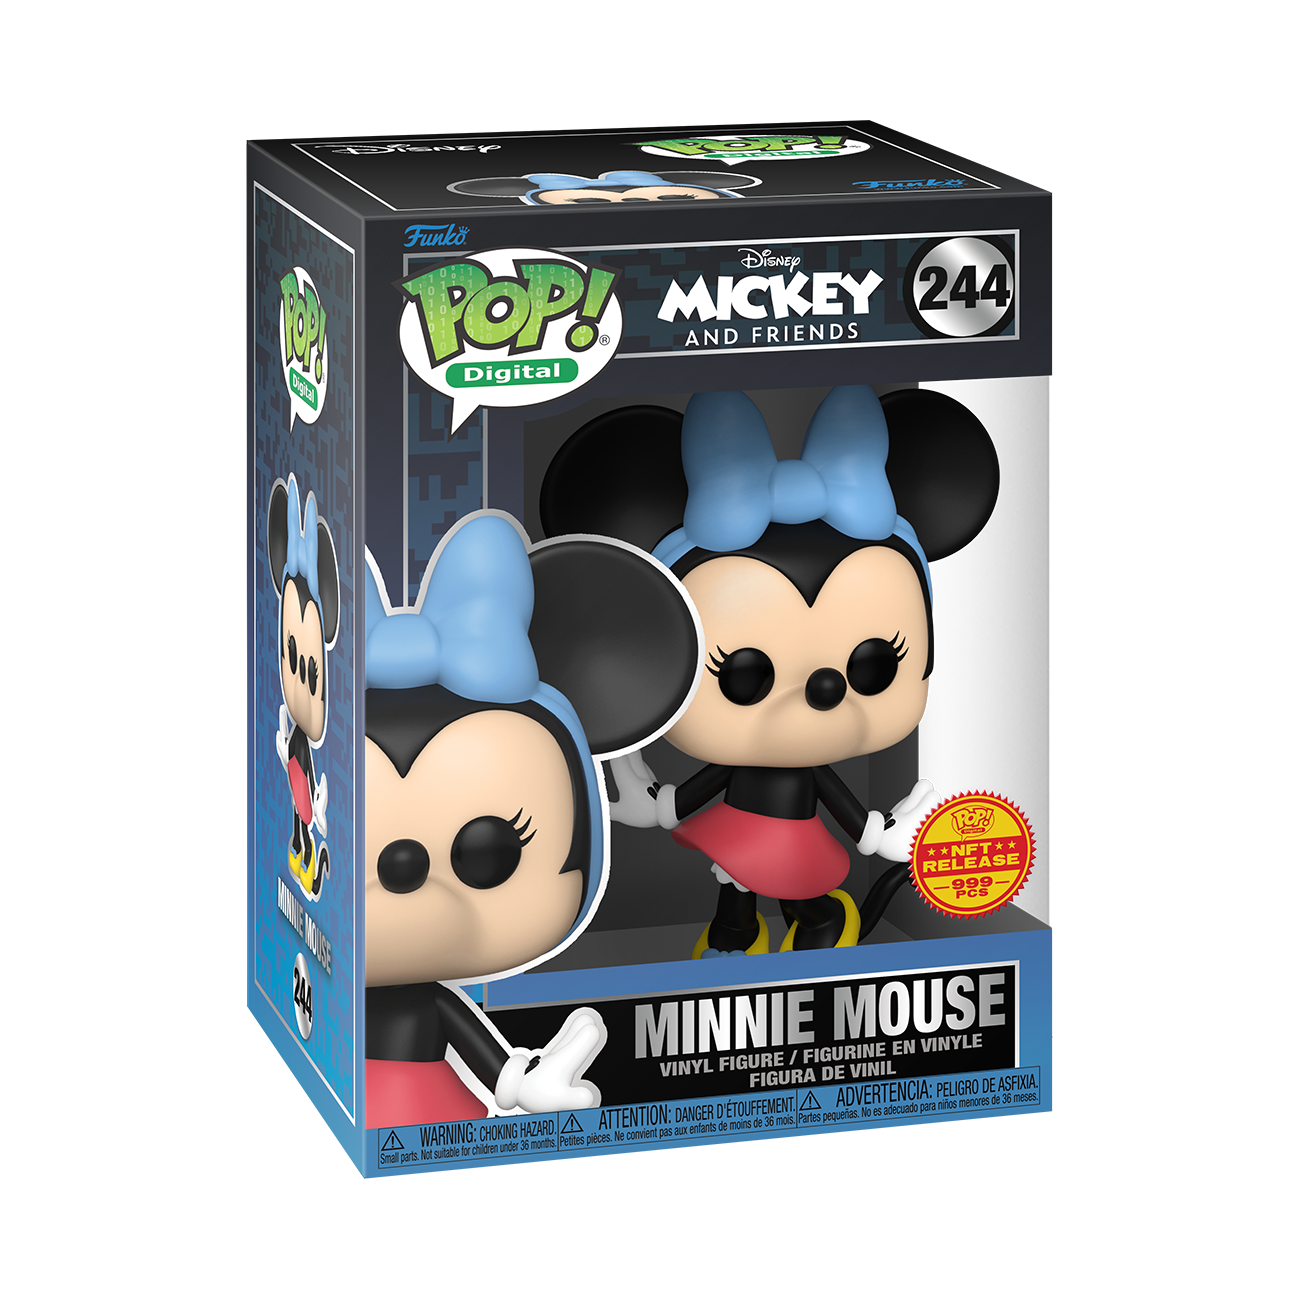 Disney’s Mickey and Friends: Funko Digital Pop! Series 1 Minnie Mouse